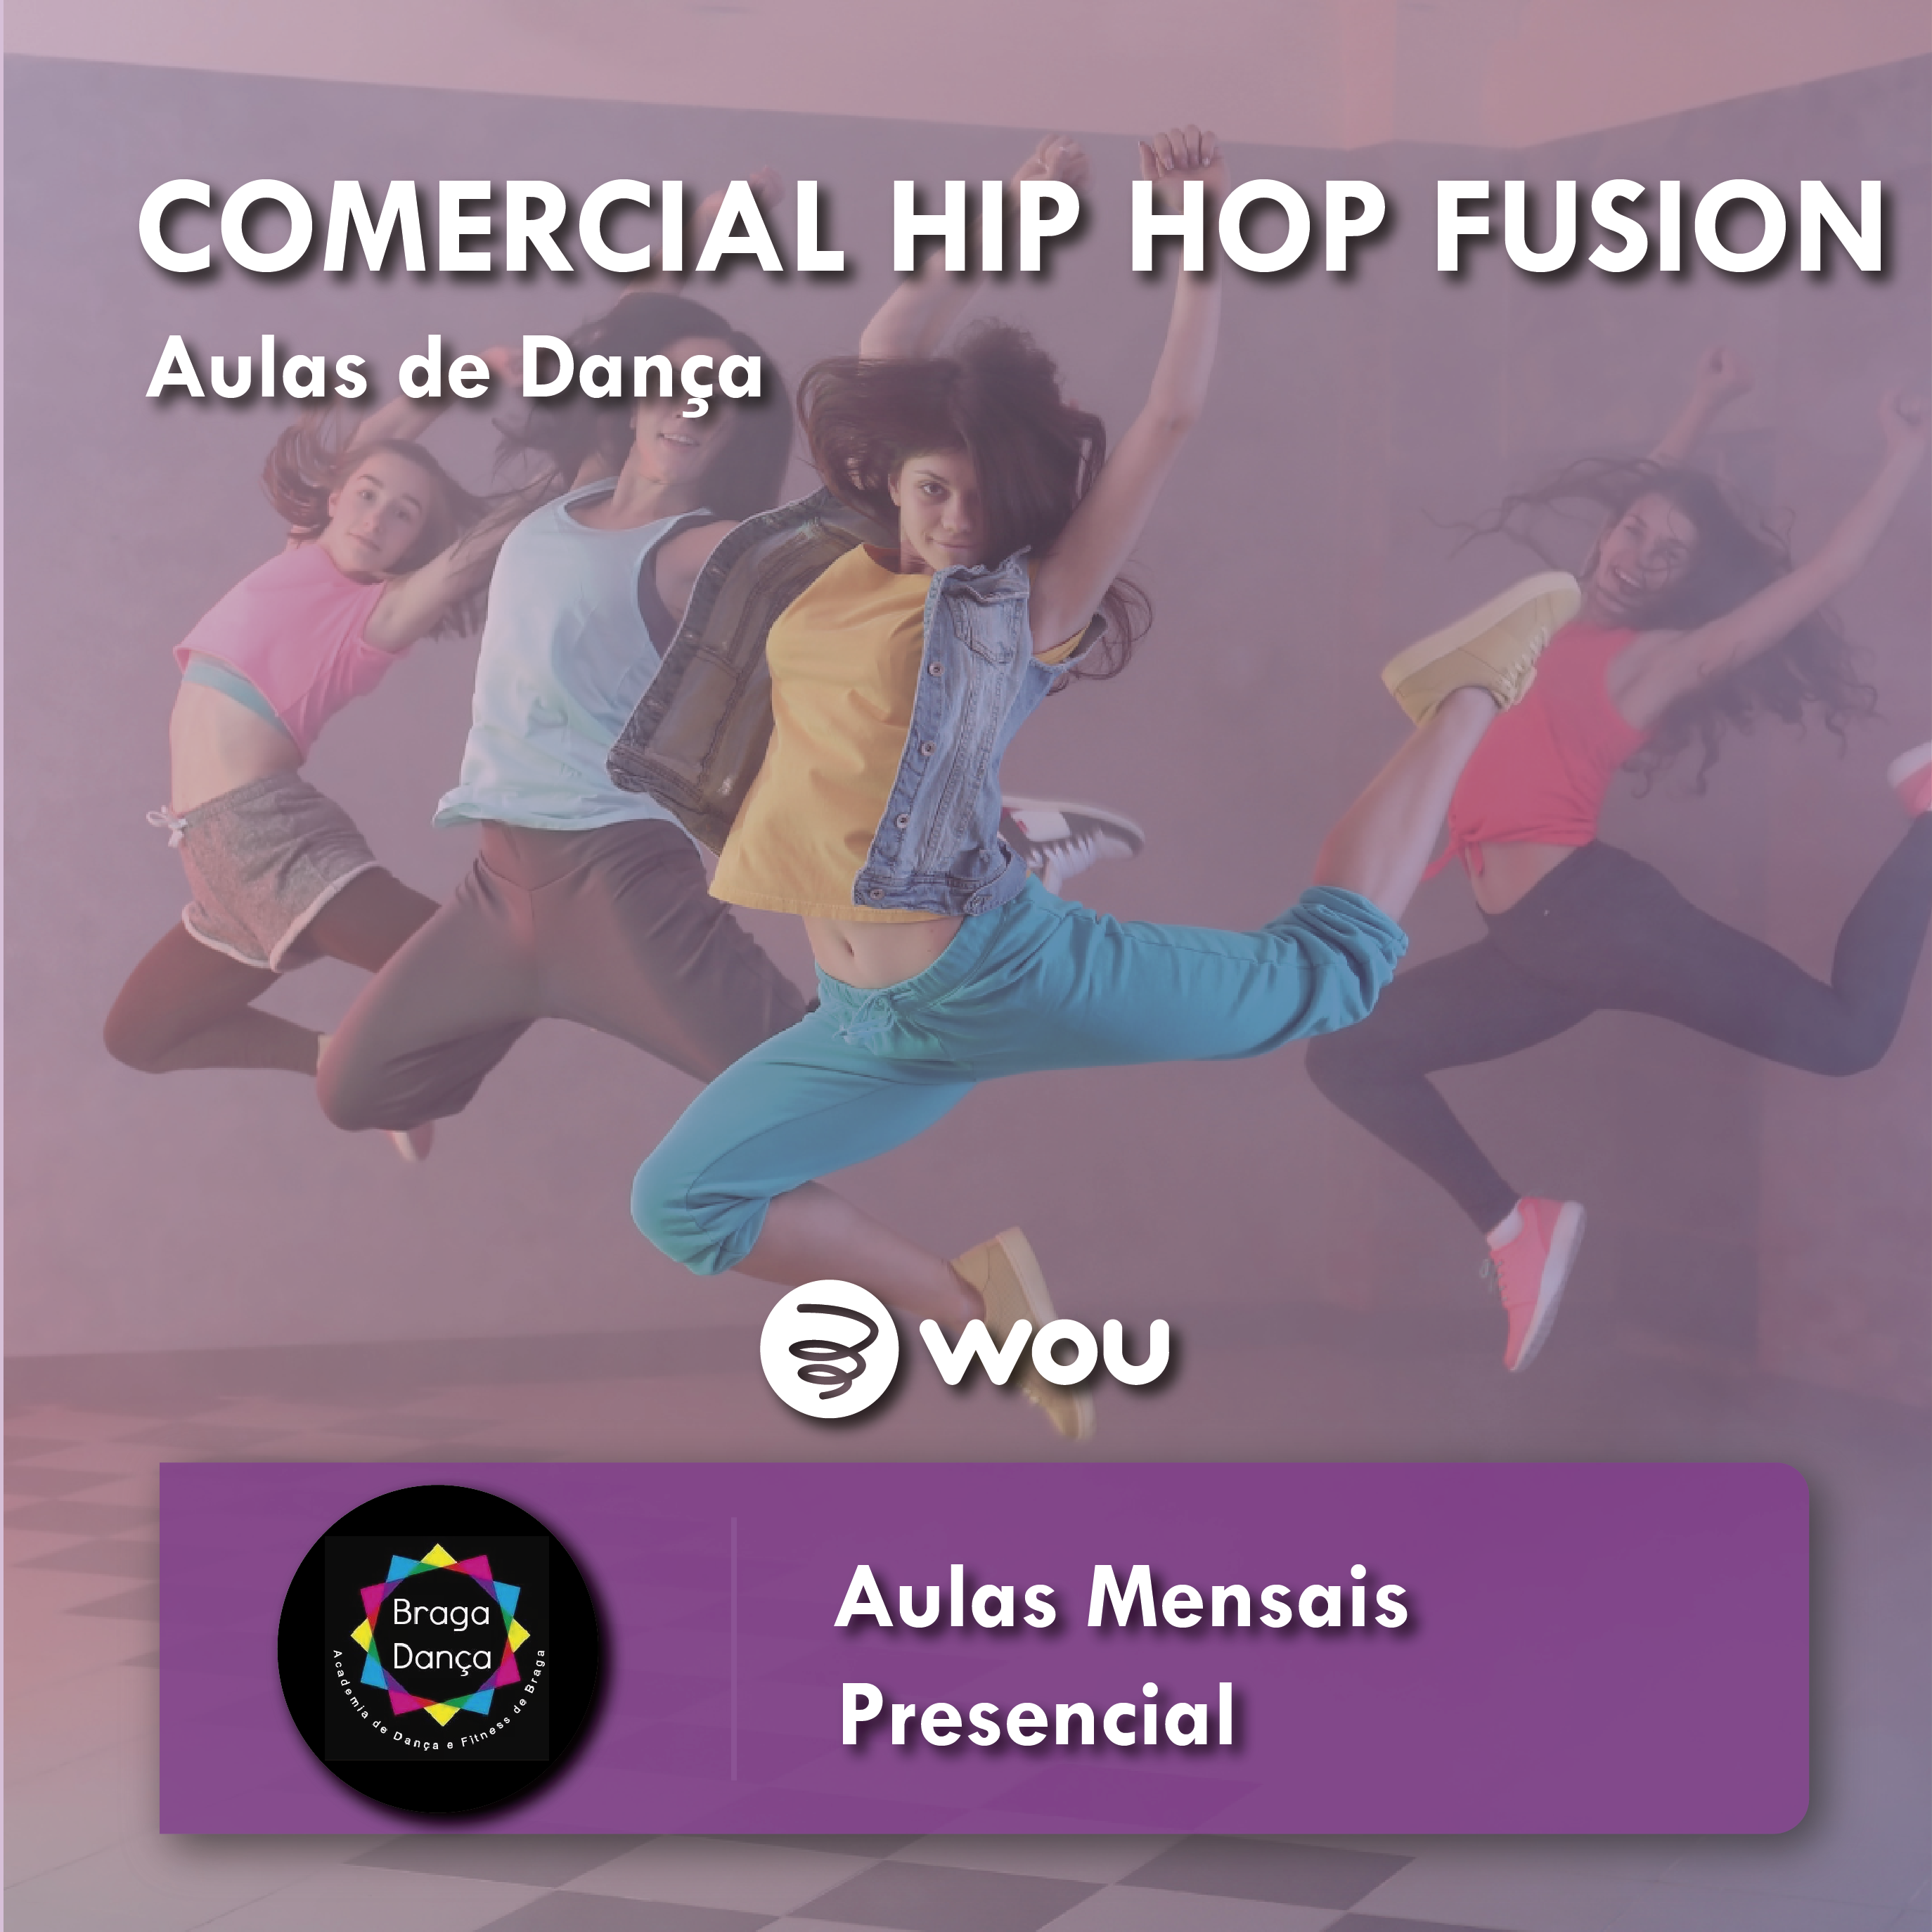 Commercial Hip Hop Fusion Classes in Braga